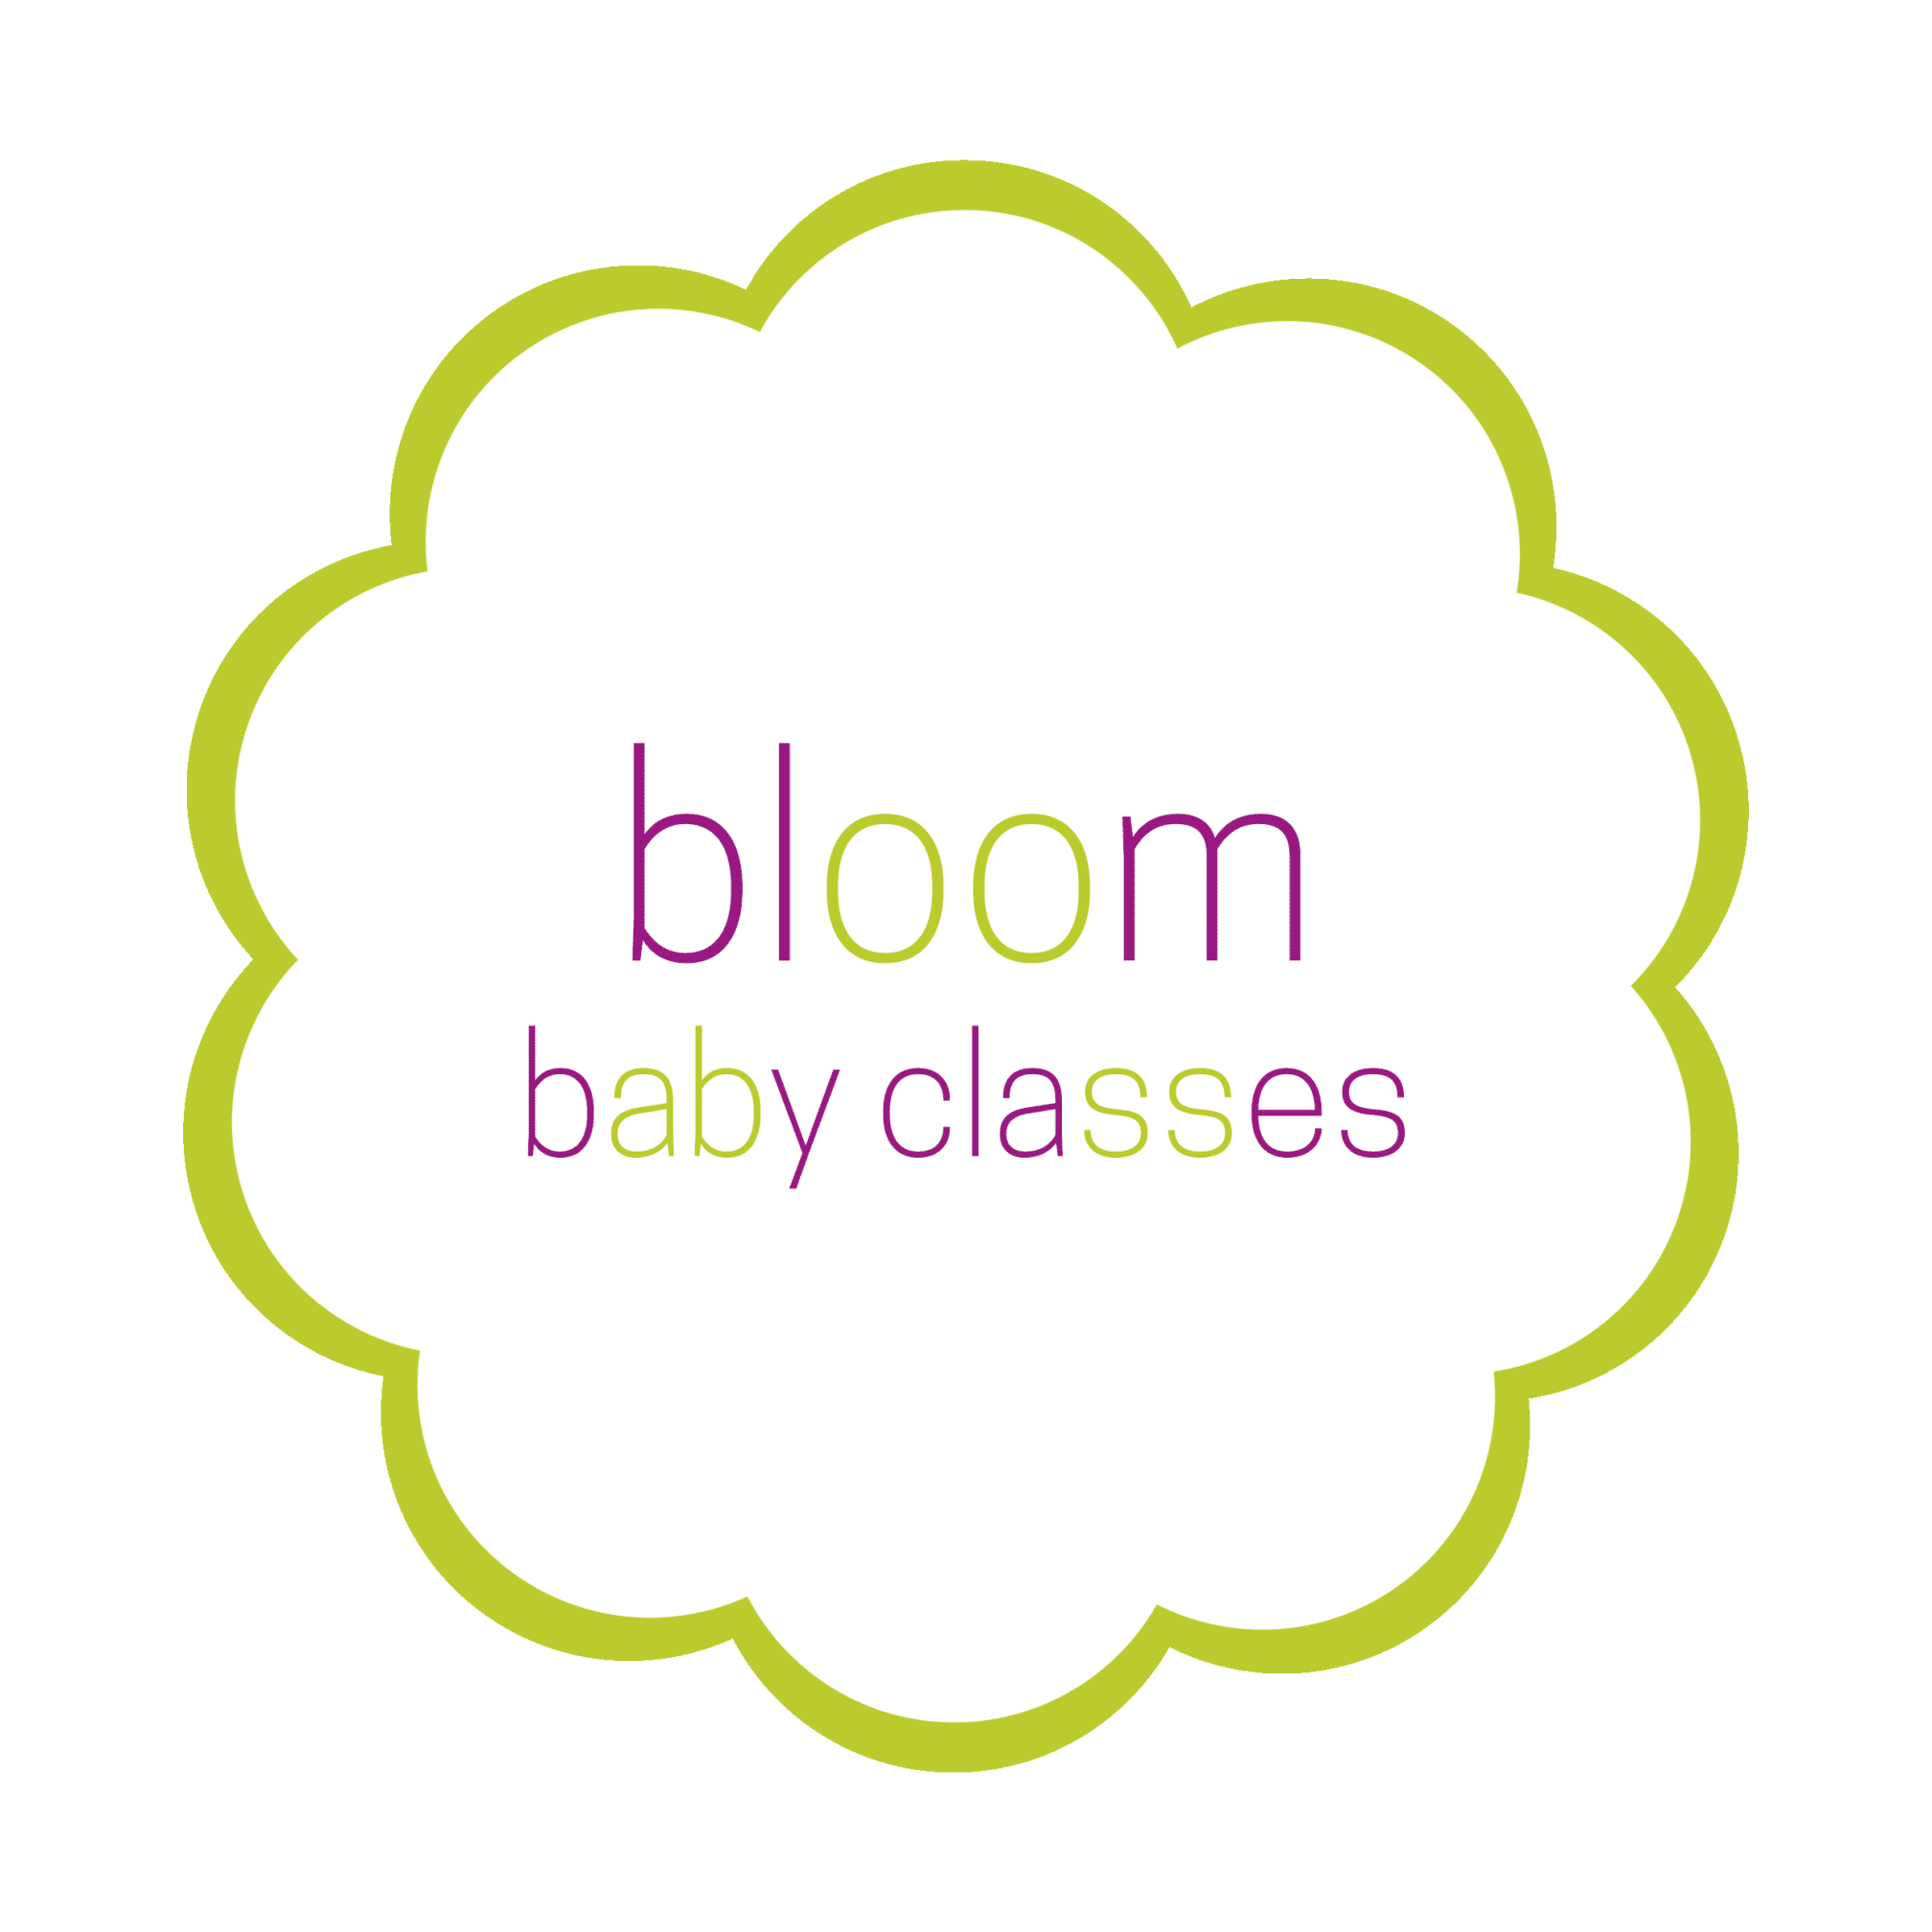 Bloom Baby Classes Tamworth - Tamworth, Staffordshire - 07846 773073 | ShowMeLocal.com